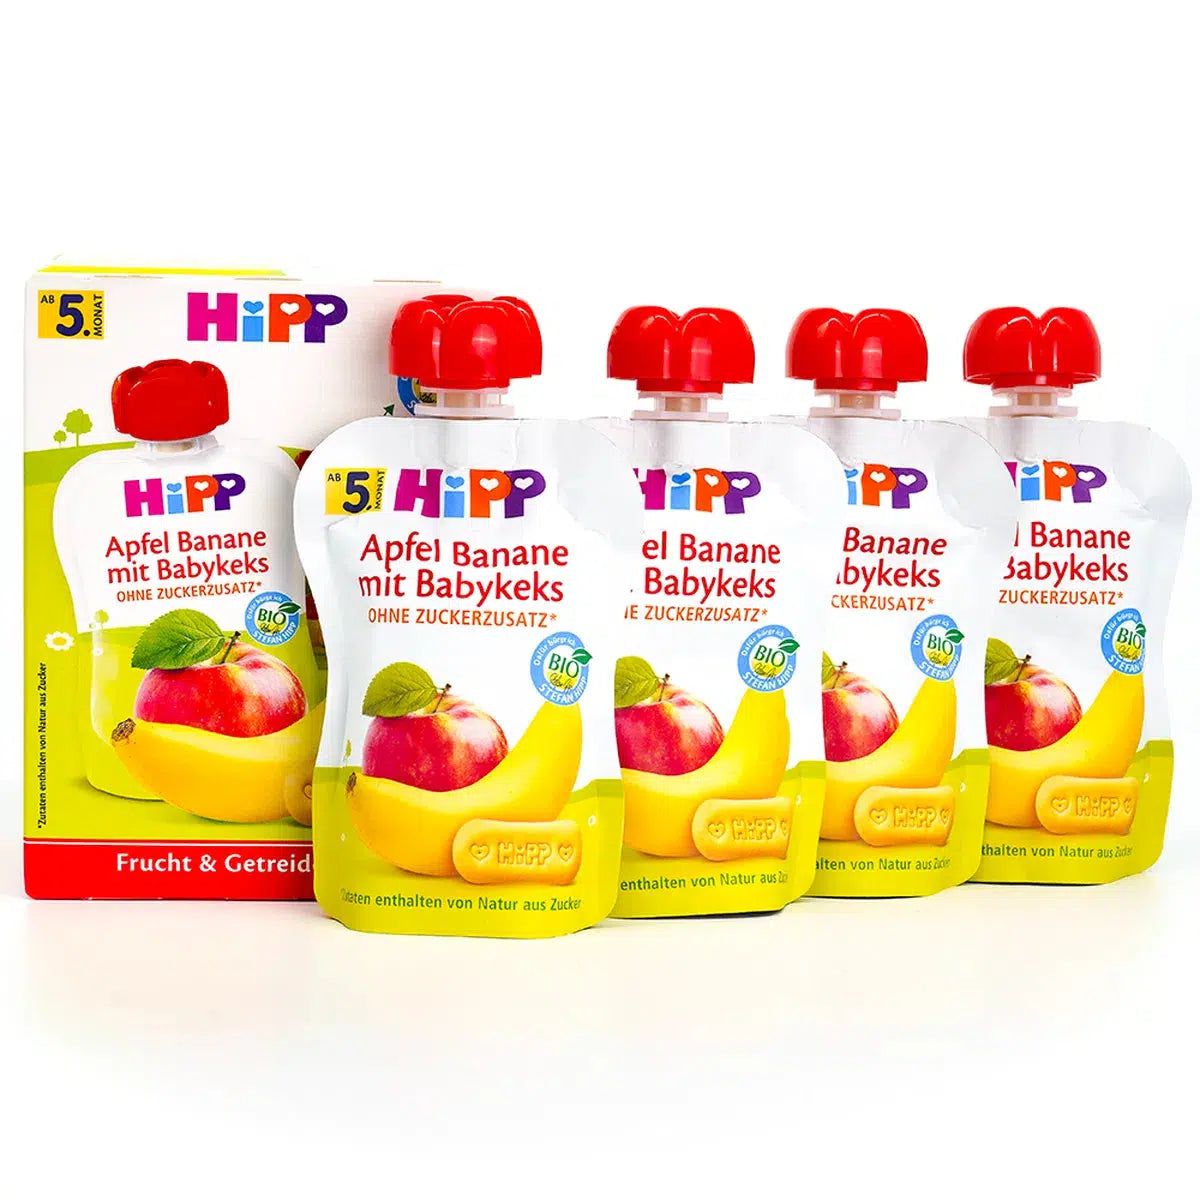 HIPP HIPPIS FRUIT MOUSSE FOR BABY - BIG CHOICE - 100G - 100% BIO